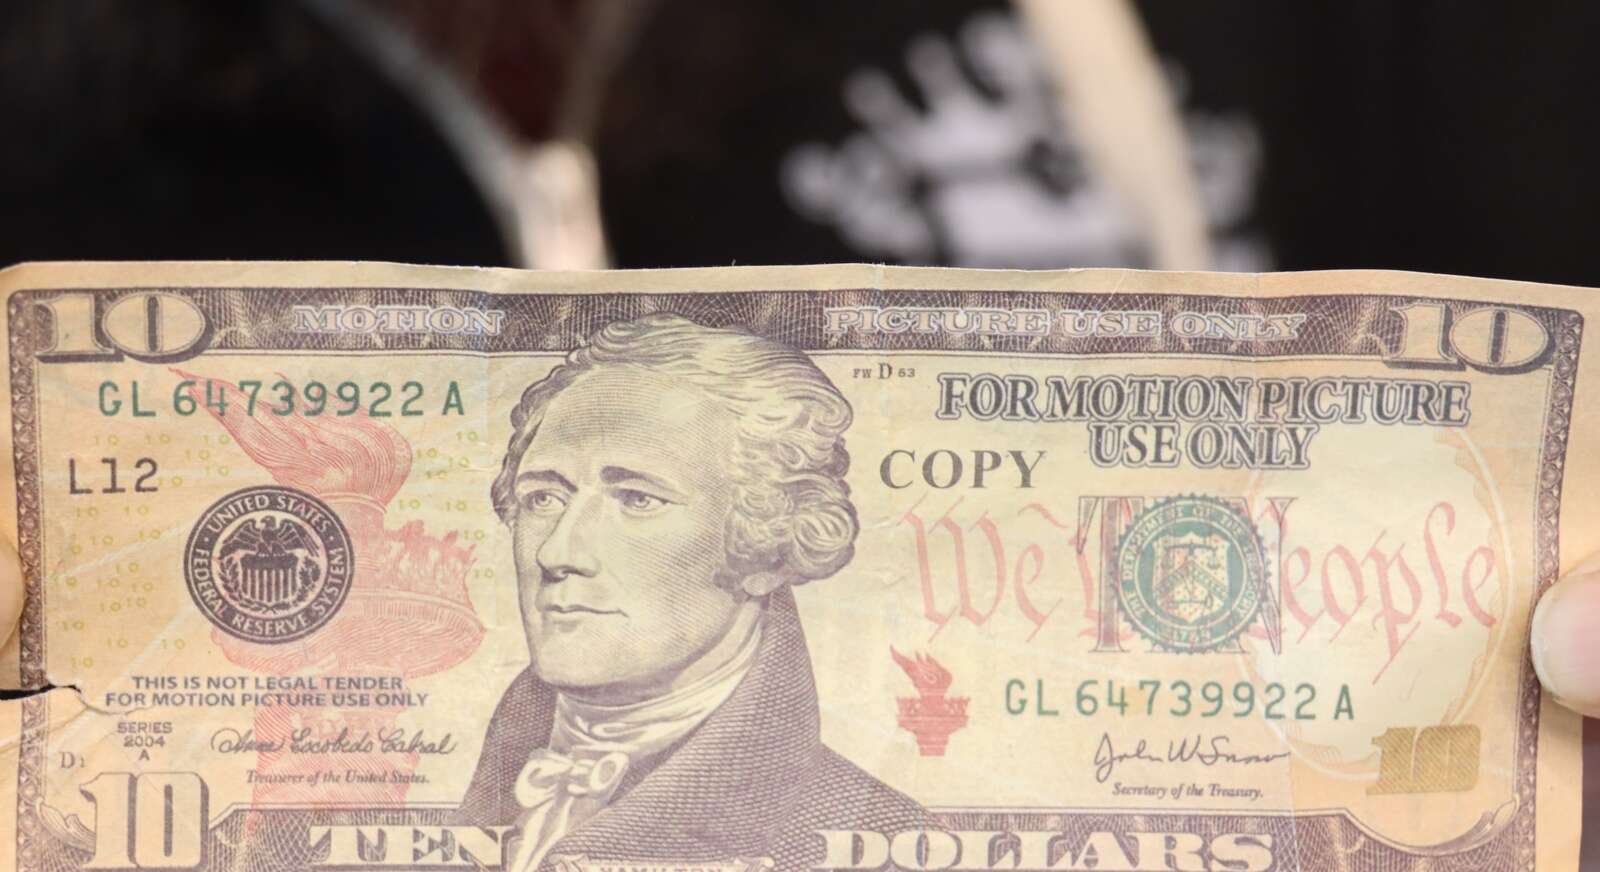 GFPD warns of counterfeit $50 bills circulating